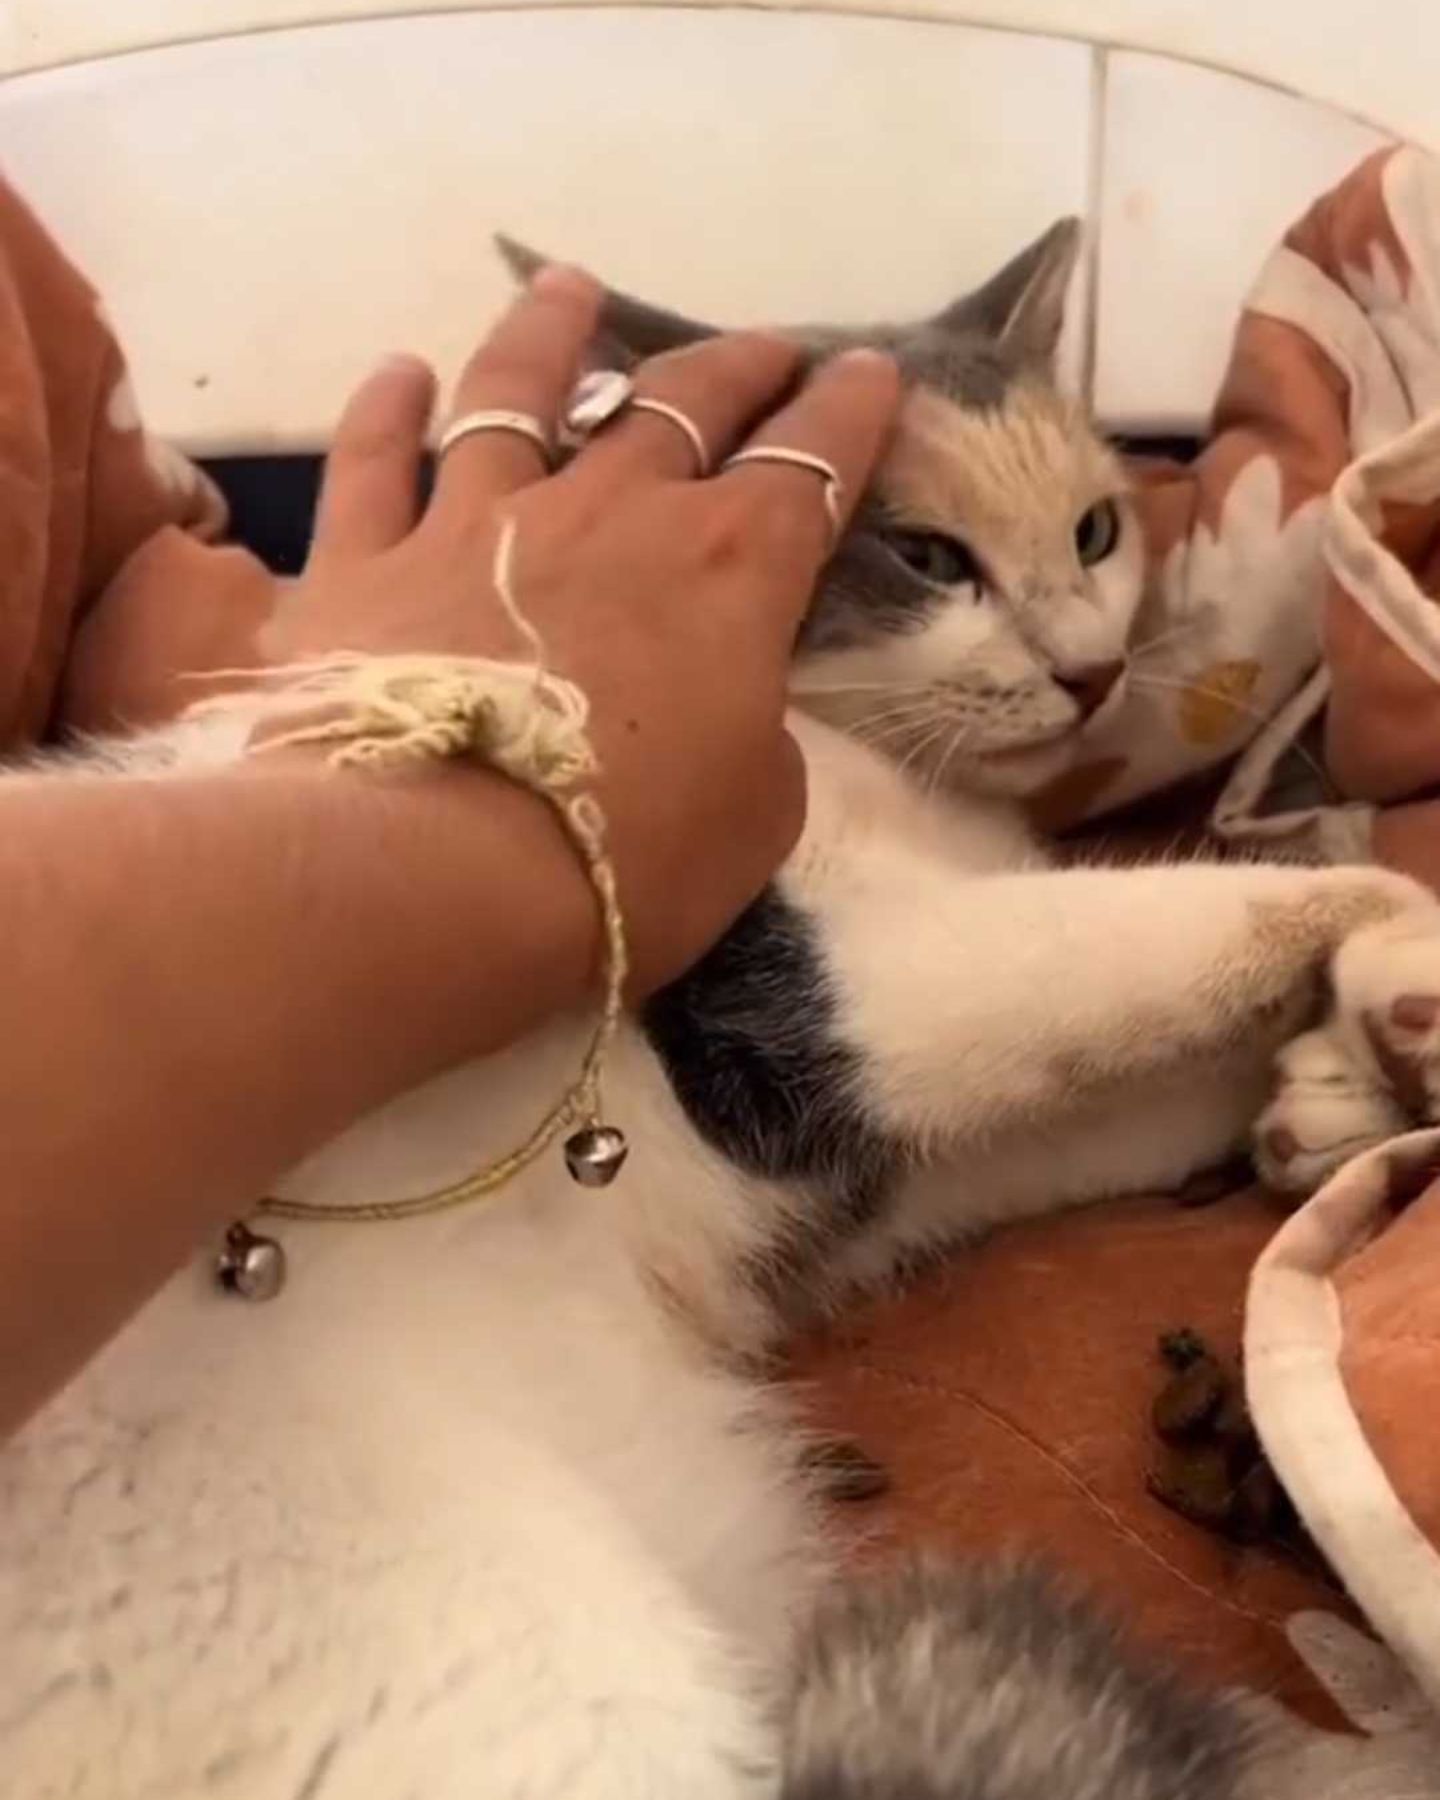 woman petting paralyzed cat